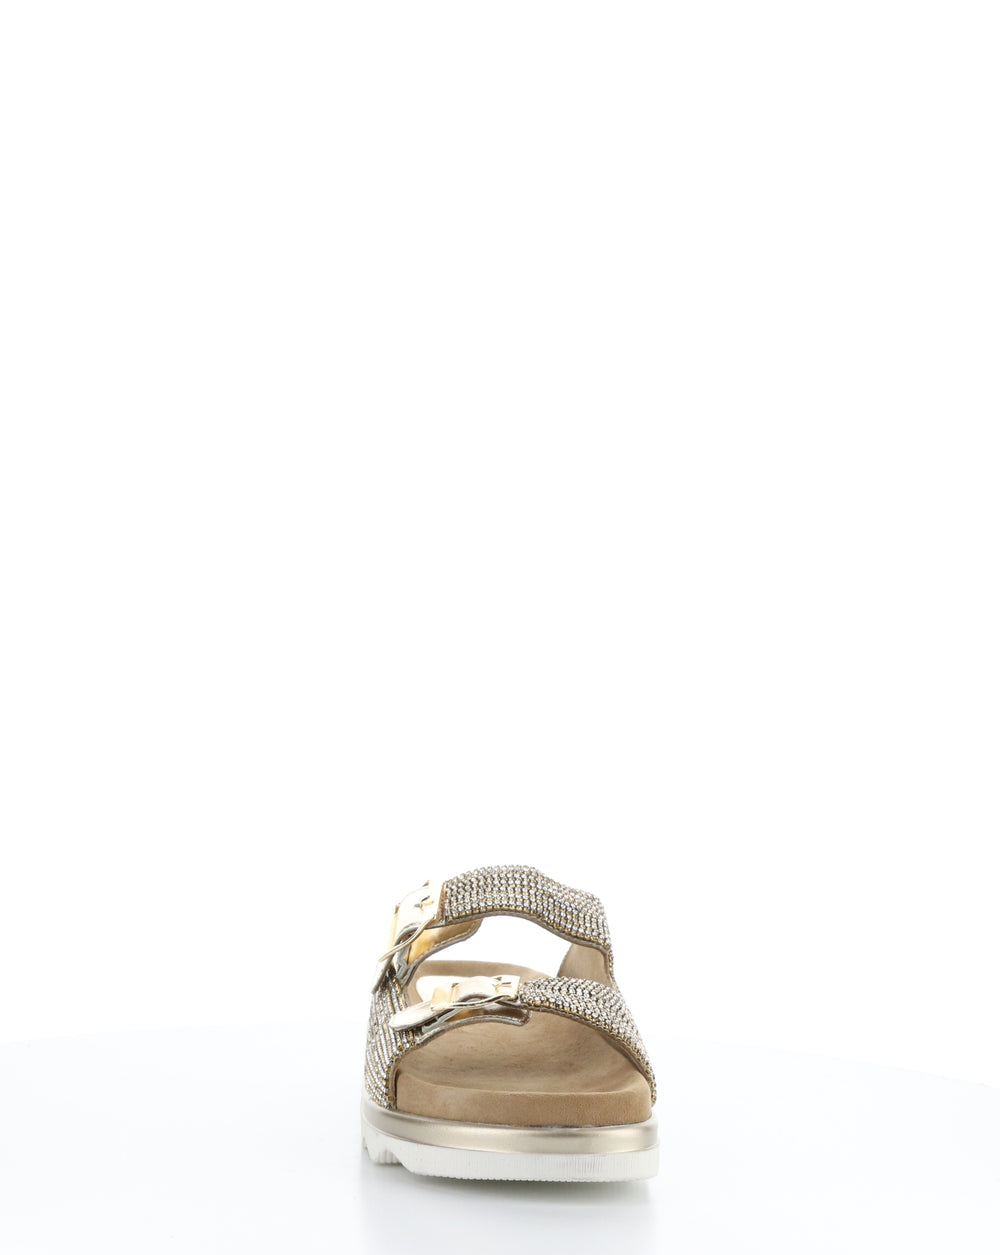 DAHNA GOLD Slip-on Sandals